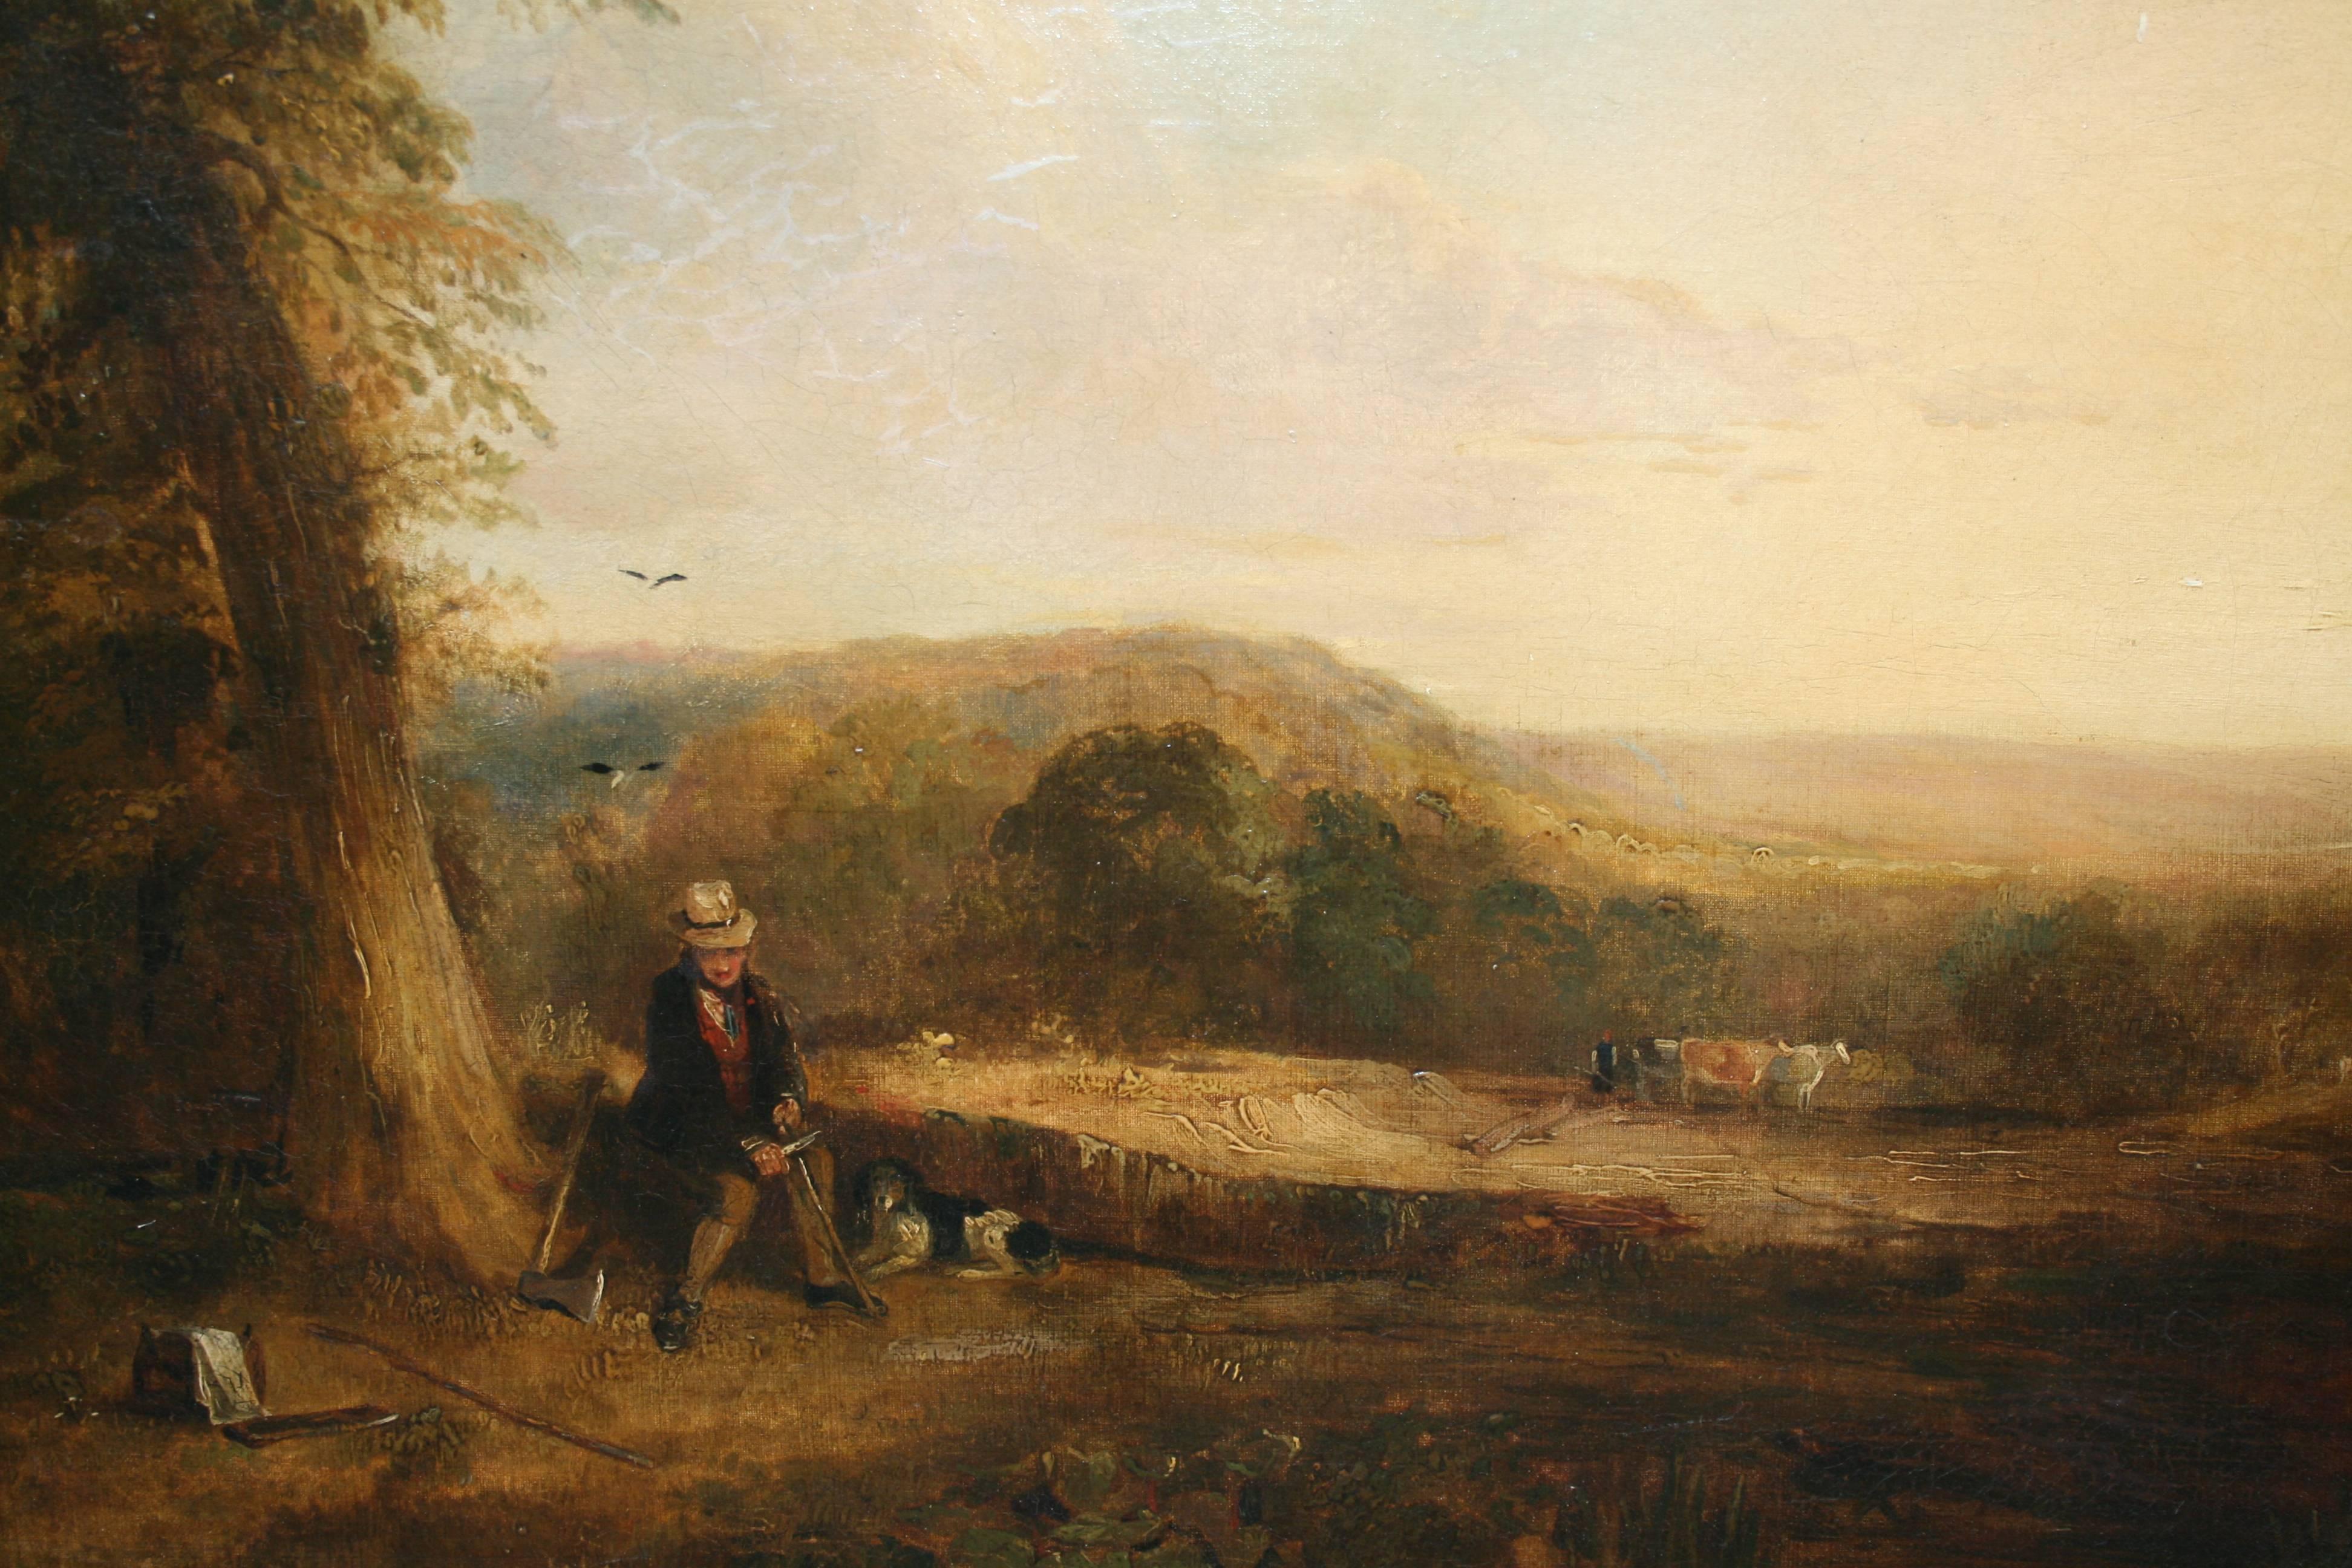 18th century landscape paintings